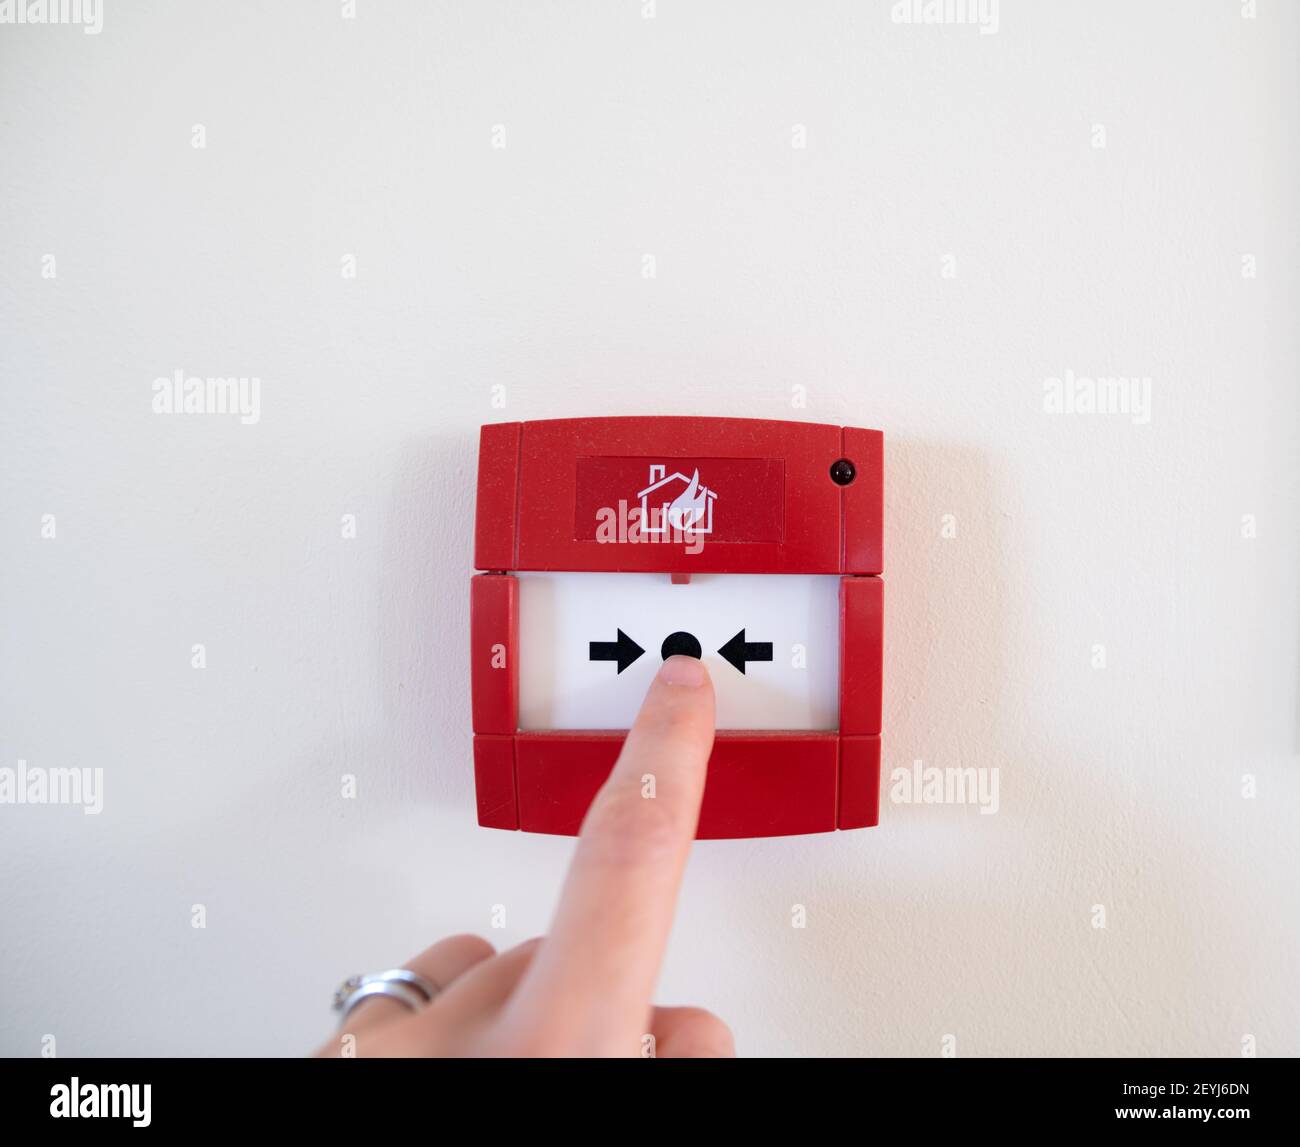 Finger ready to press a fire alarm button Stock Photo